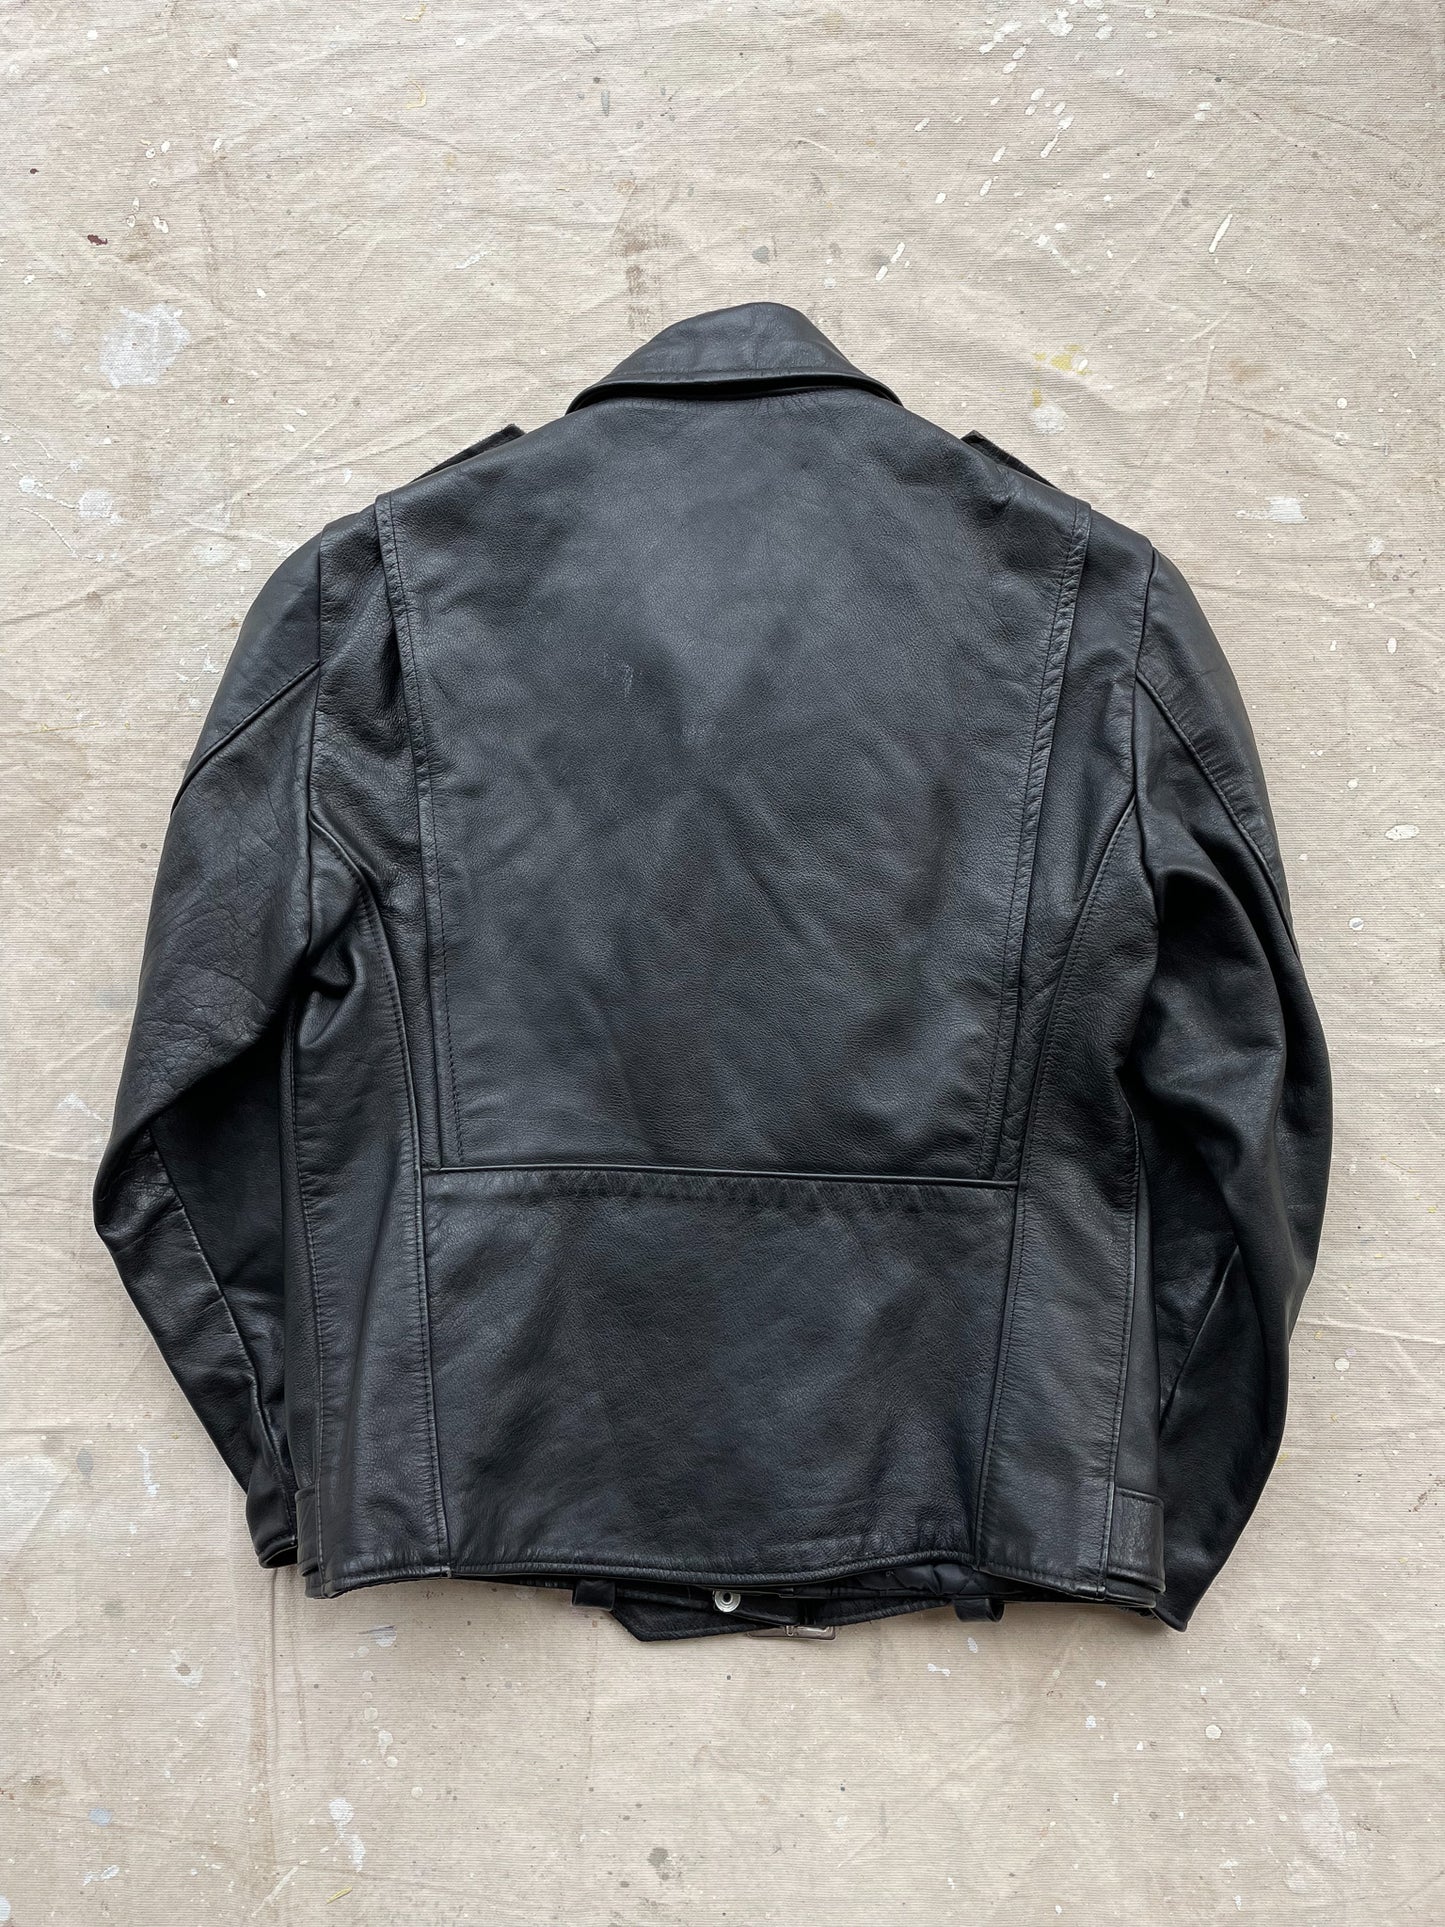 Genuine Leather Motorcycle Jacket—[L]